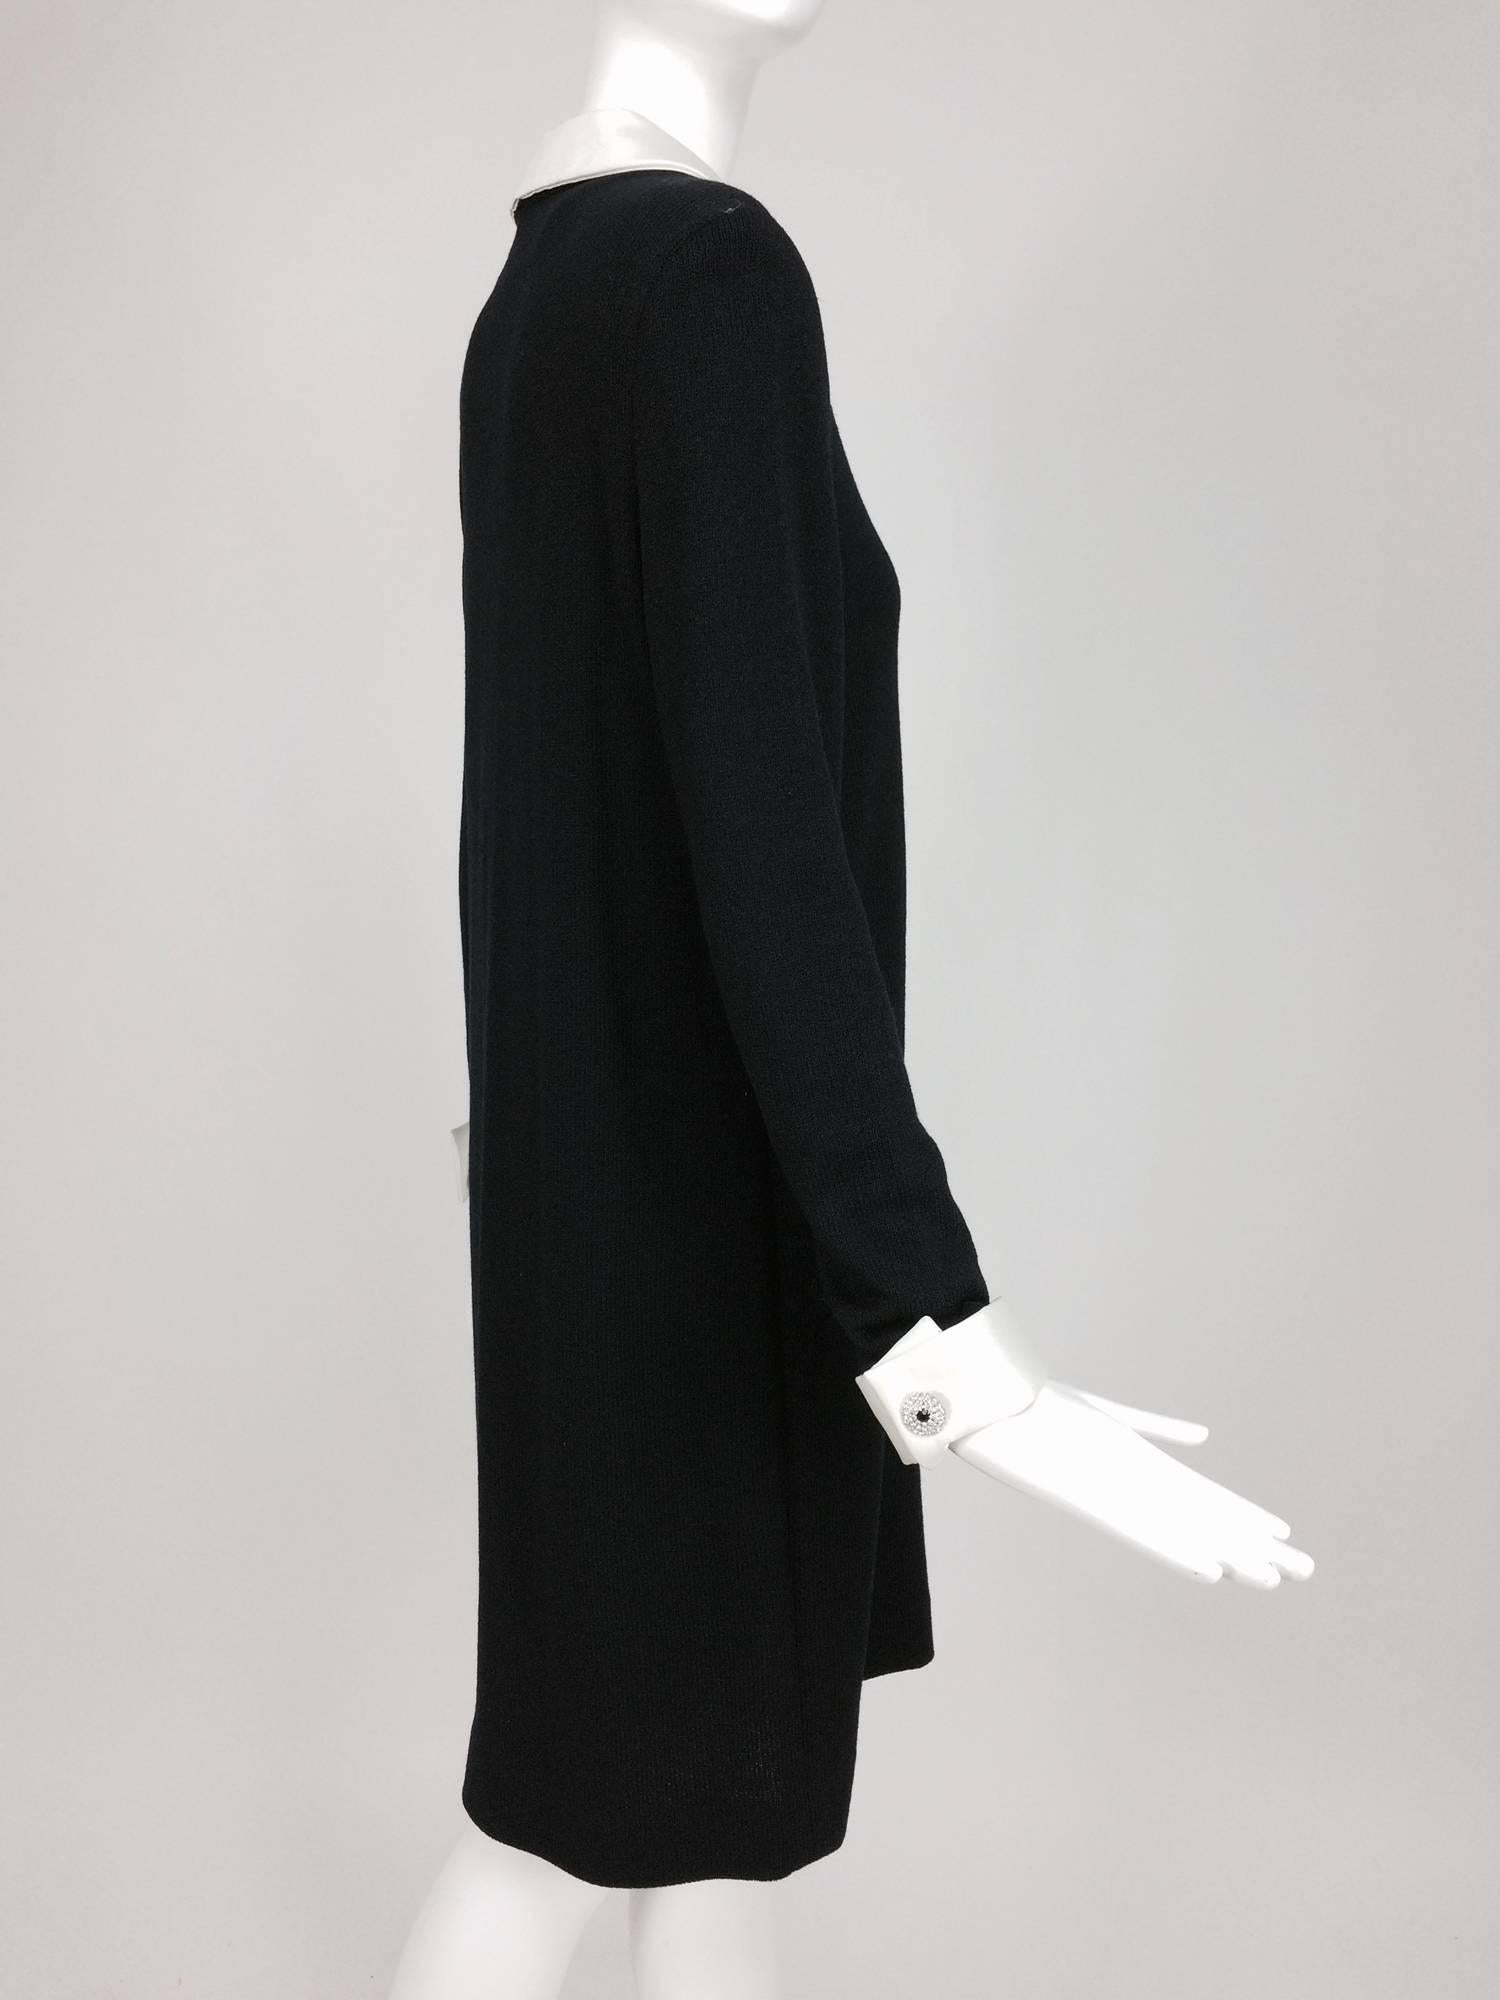 Women's Adolfo black knit A line dress with white satin collar & cuffs 1970s size 12